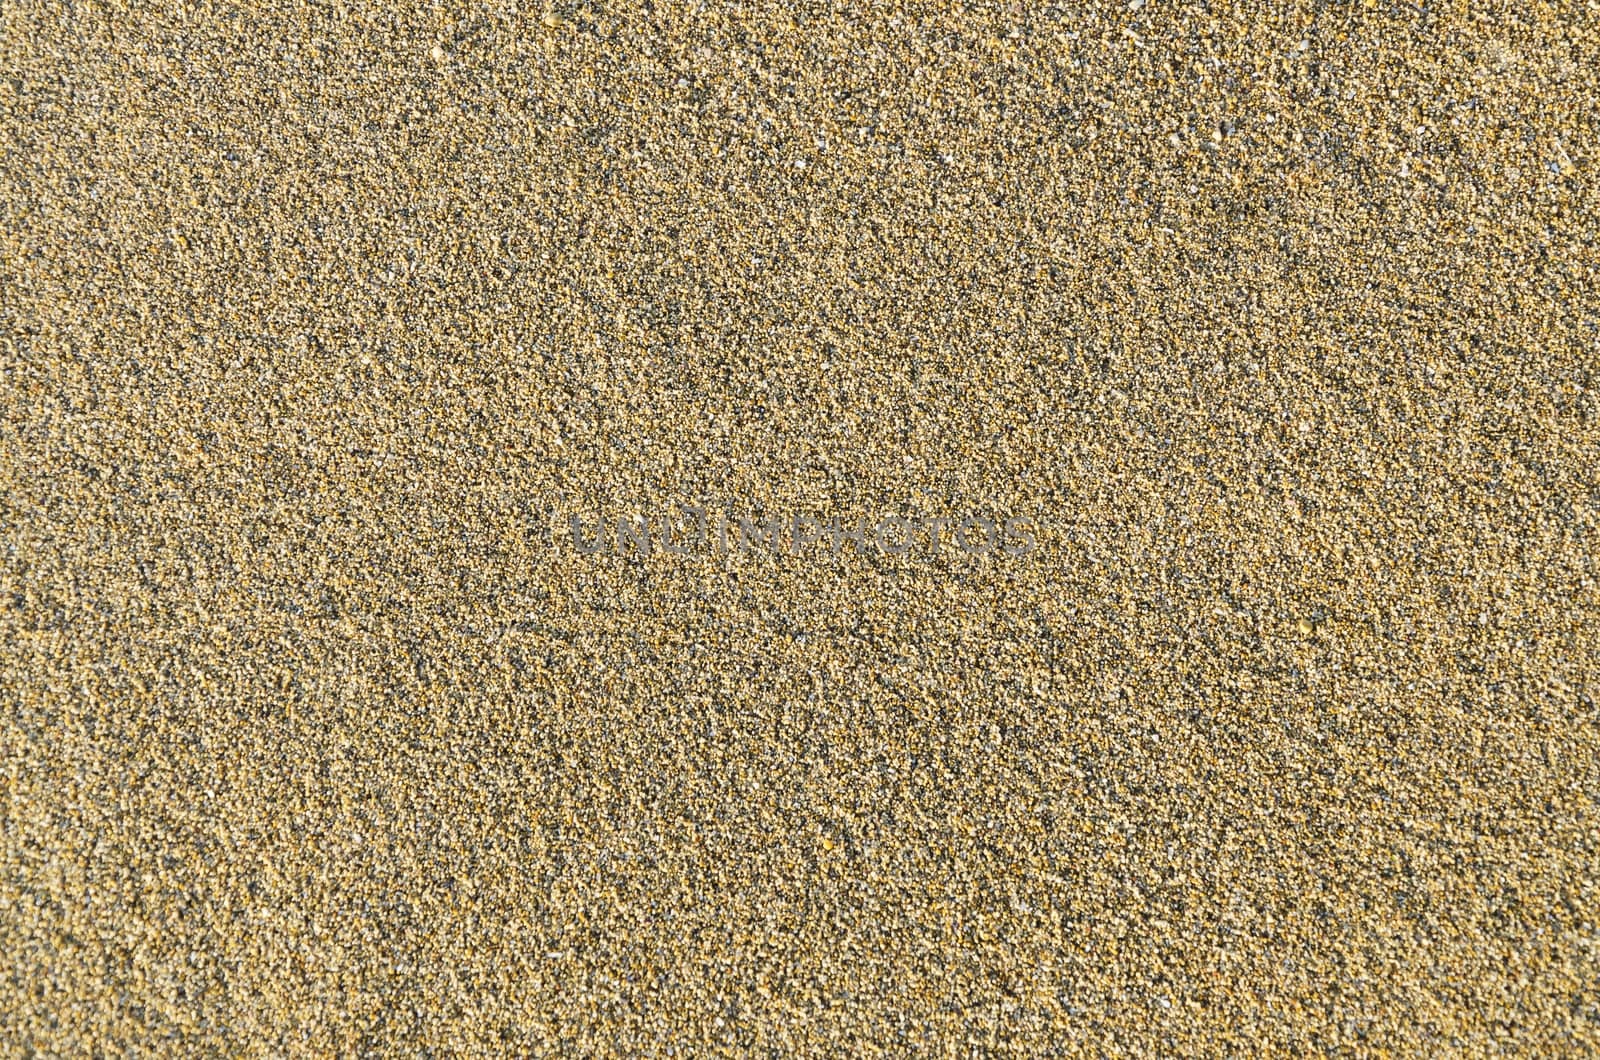 brown empty beach sand surface texture background